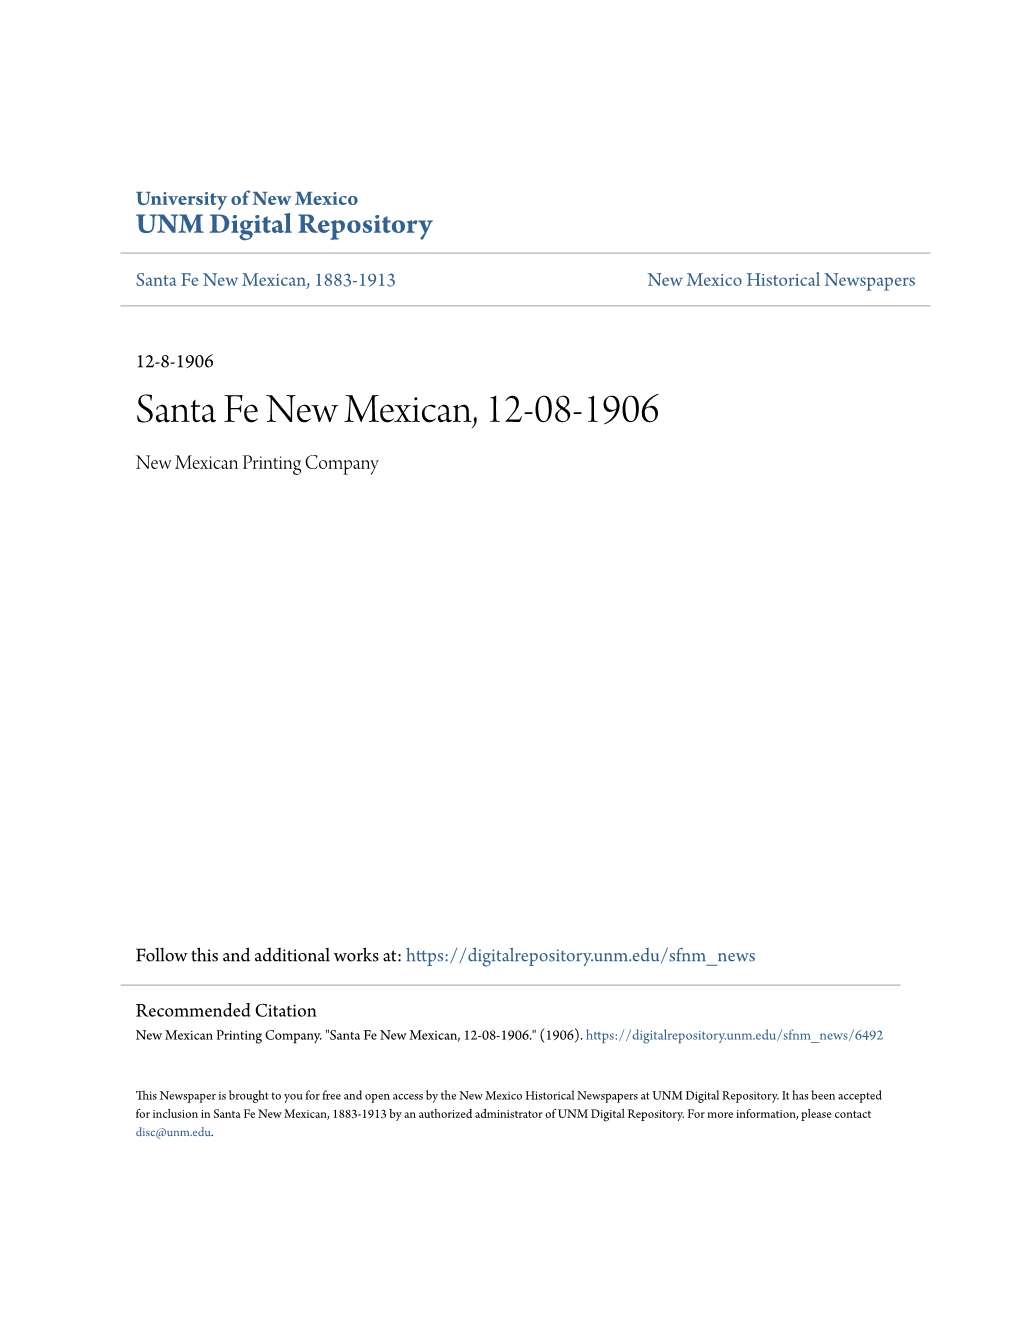 Santa Fe New Mexican, 12-08-1906 New Mexican Printing Company